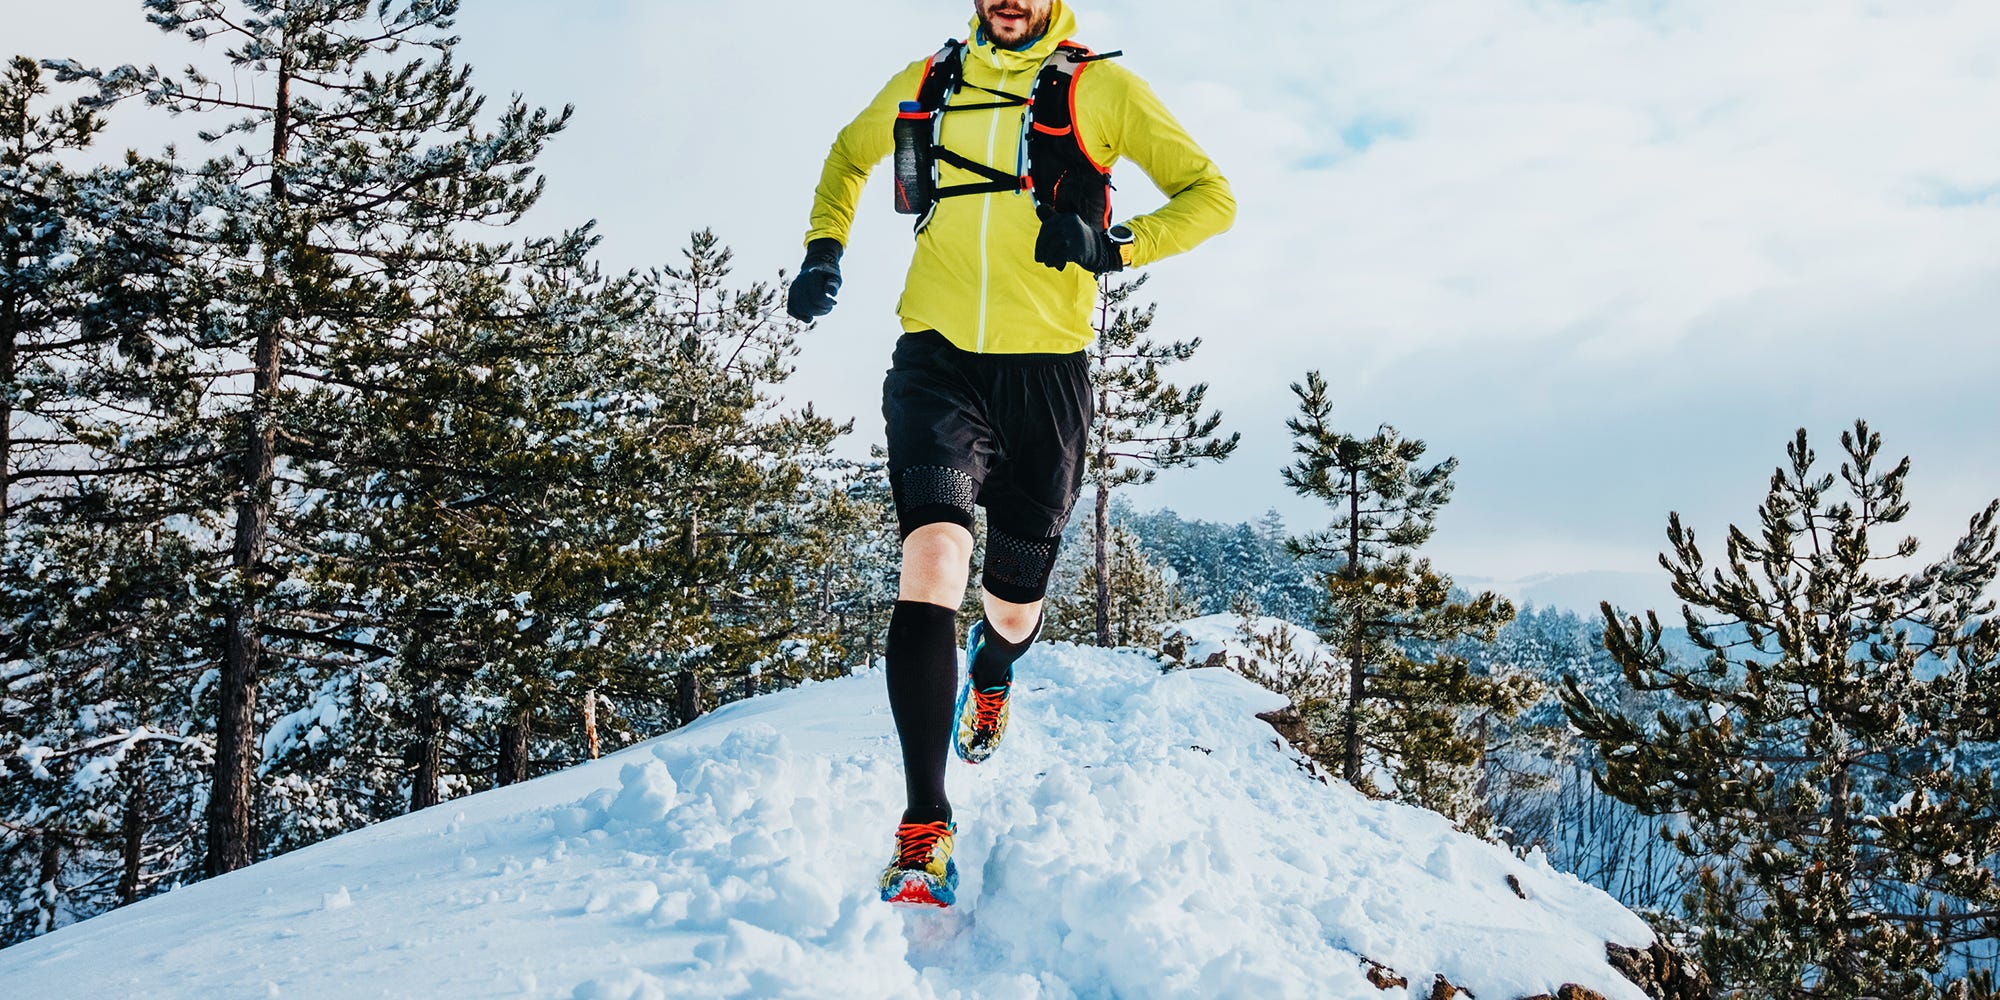 The Best Winter Running Gear for 2019 - Winter Running Clothes for Men